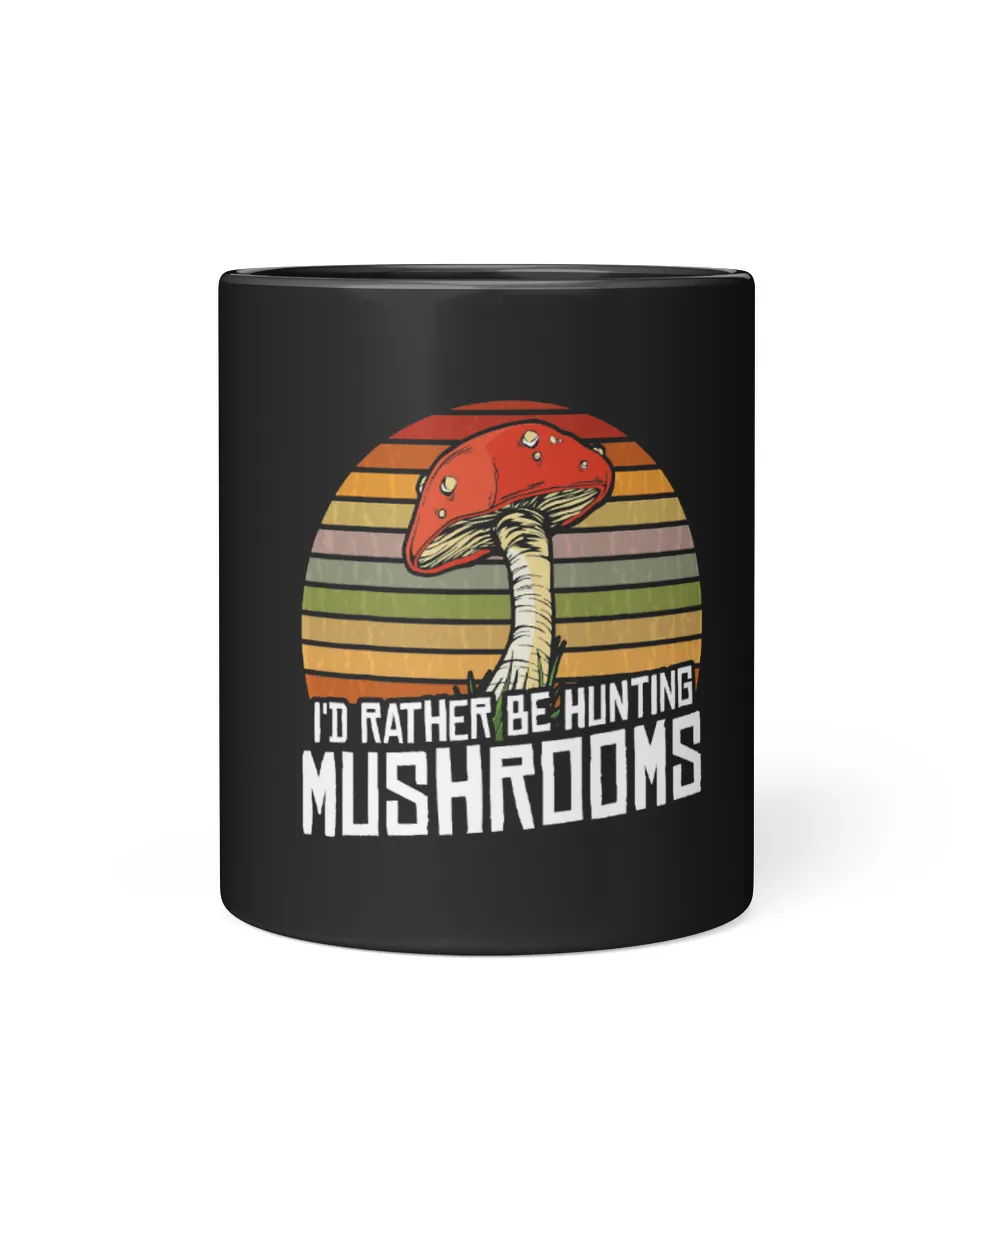 Mushroom Hunting 69